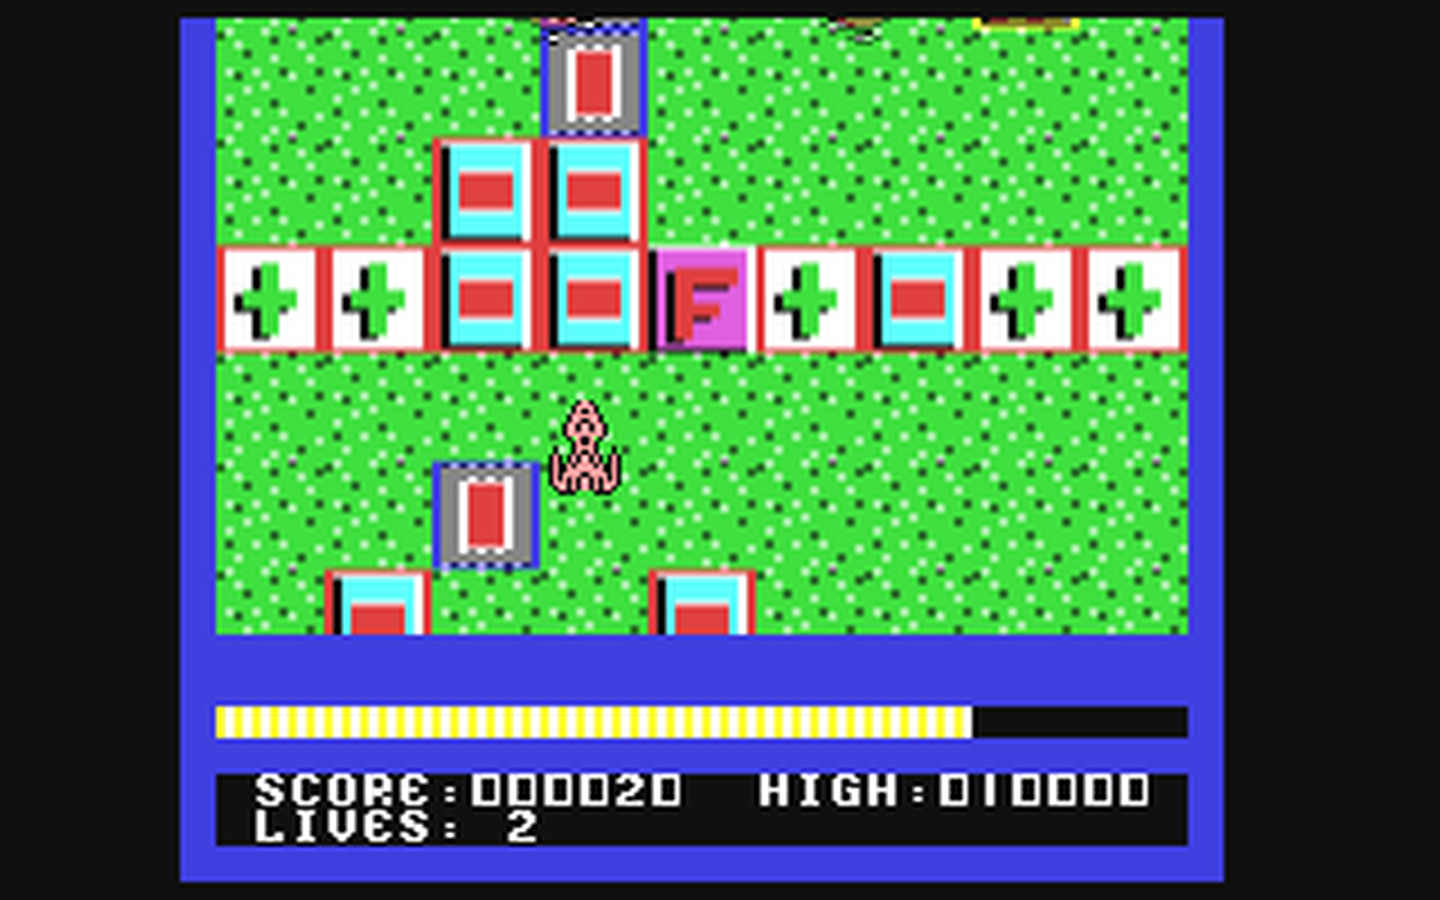 C64 GameBase Terra_Cognita Codemasters 1986